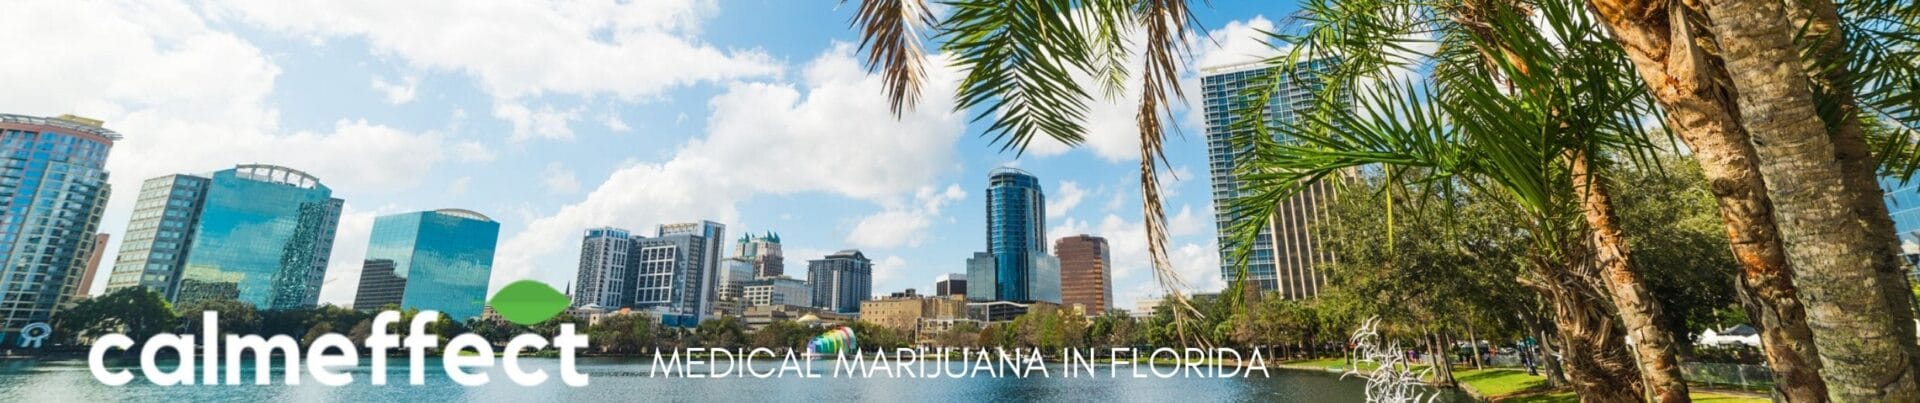 Medical Marijuana in Florida